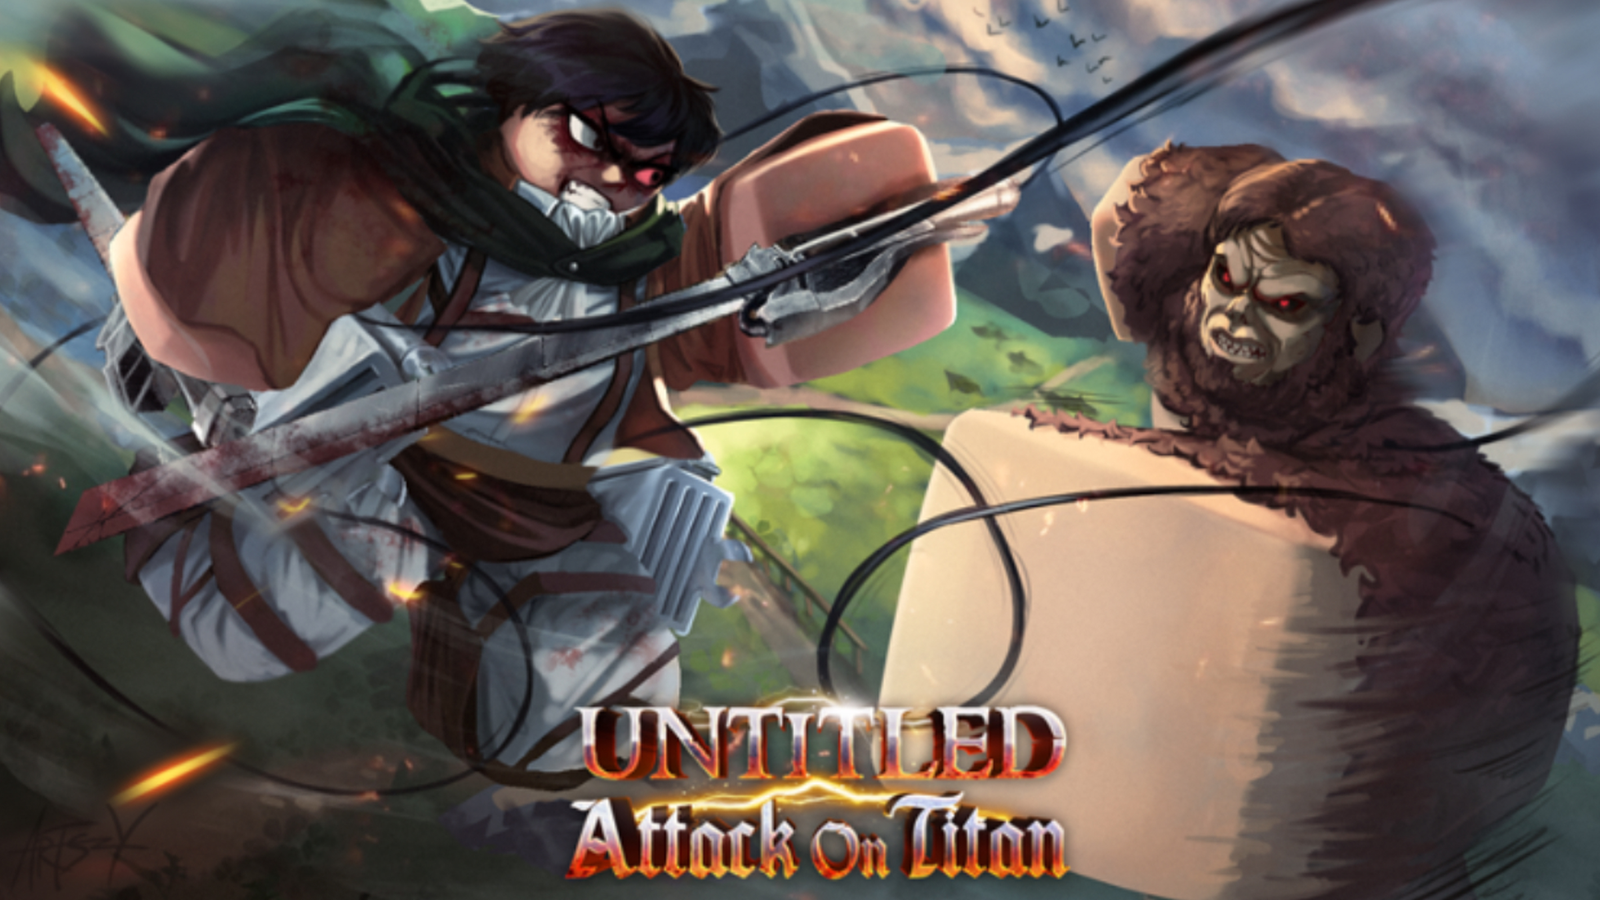 Attack on Titan - IGN